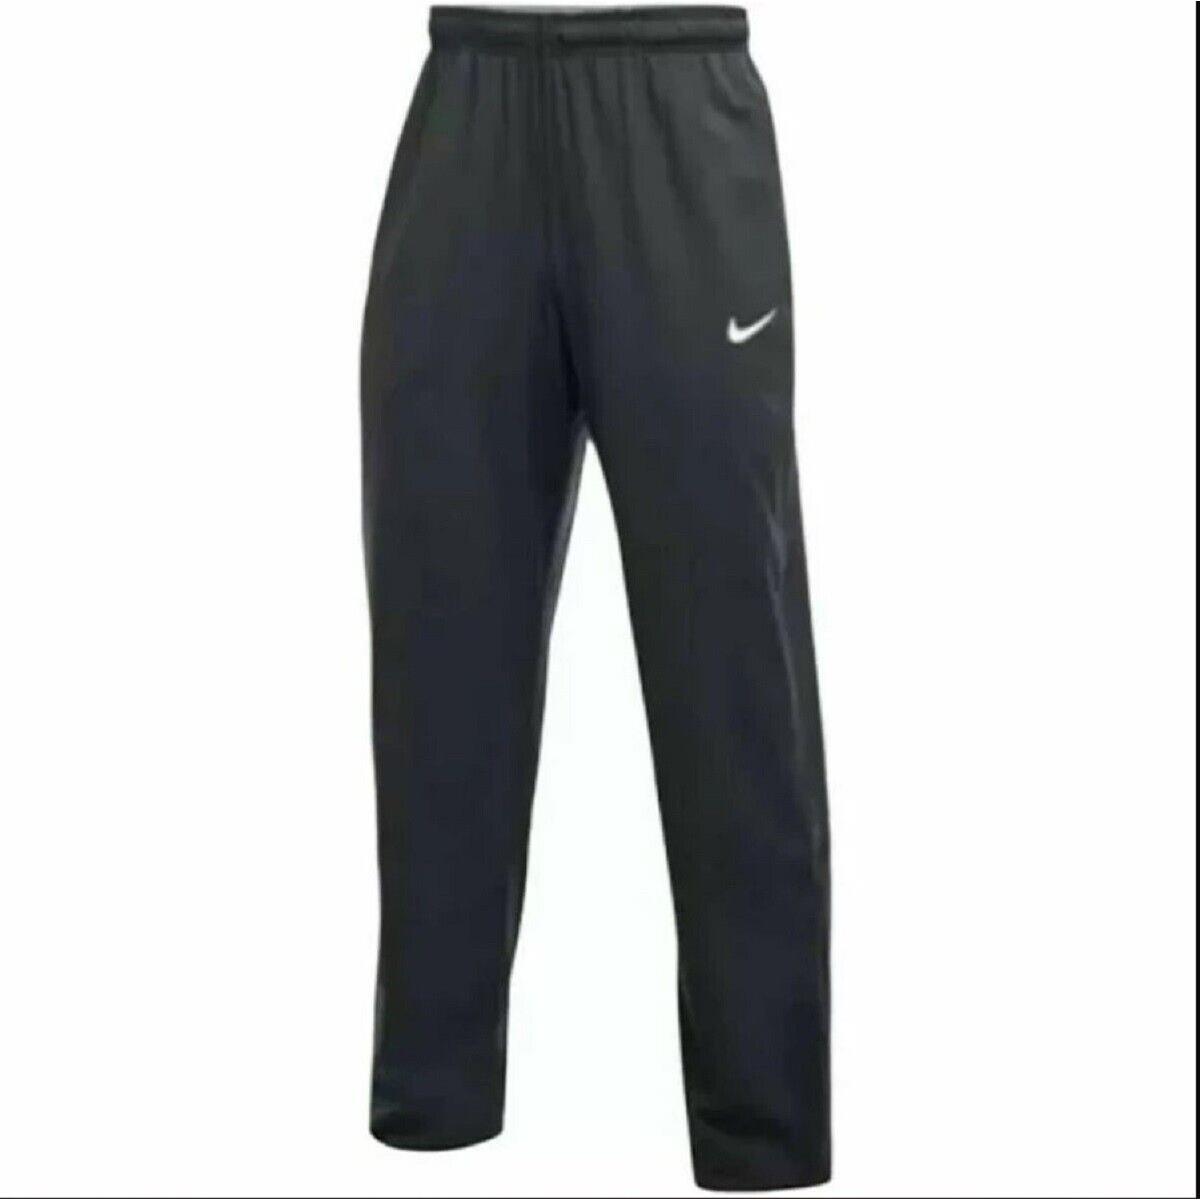 Nike Dry-fit Warmup Men`s Training Pants